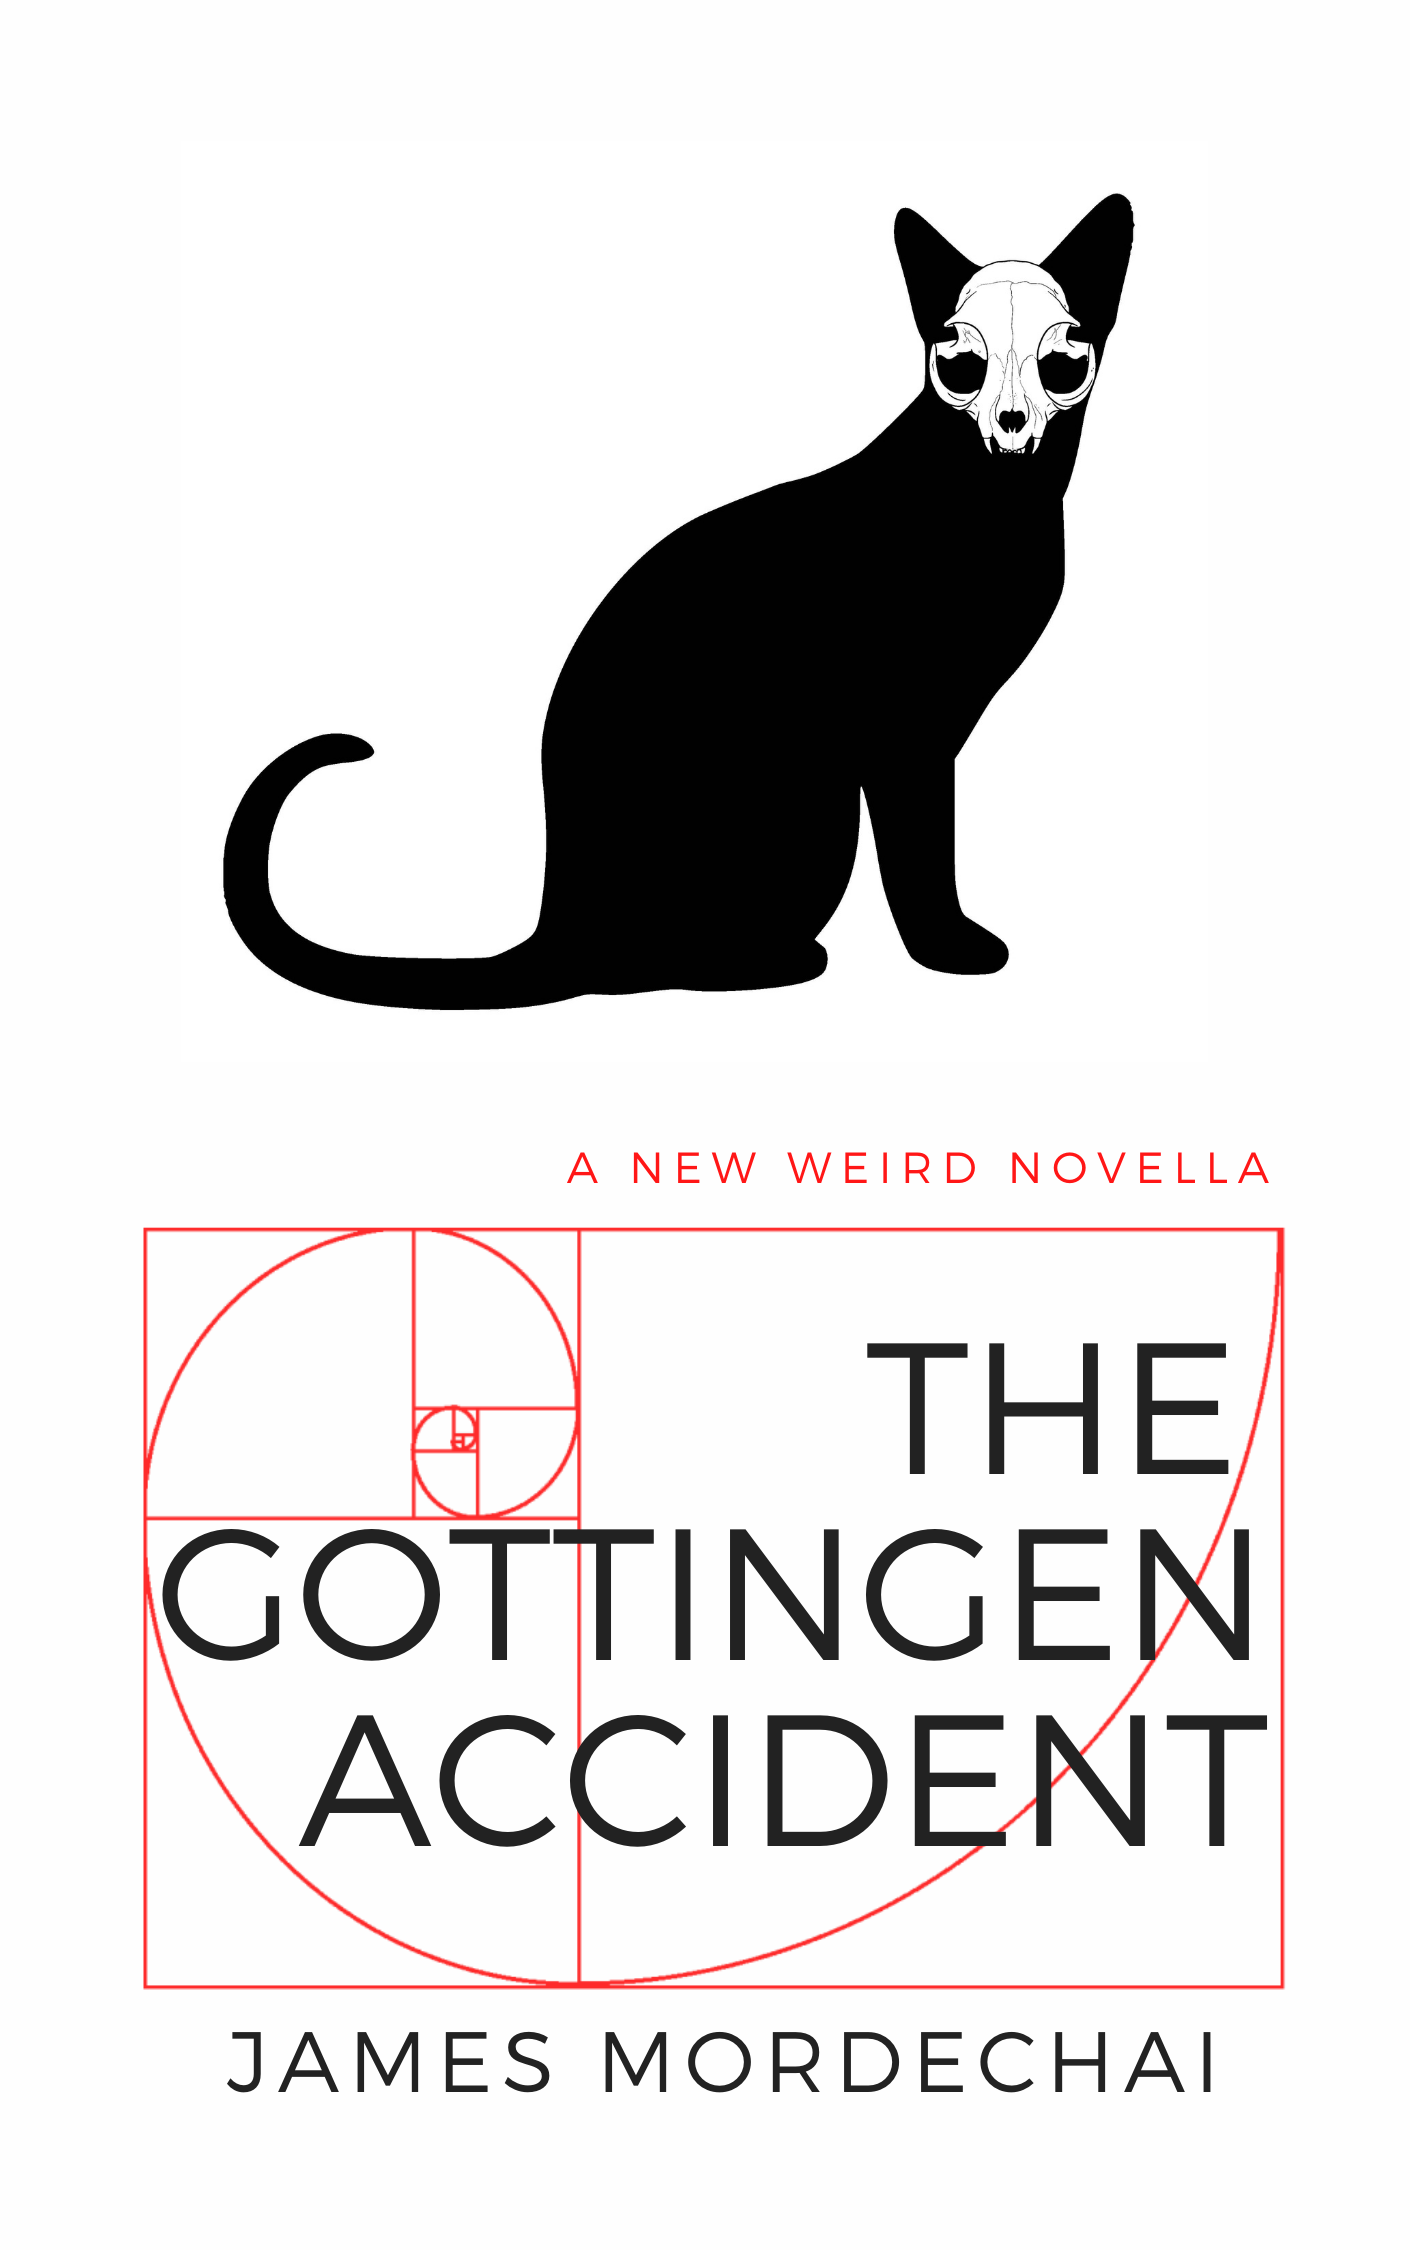 Cover of James Mordecai's science fiction novel The Gottingen Accident